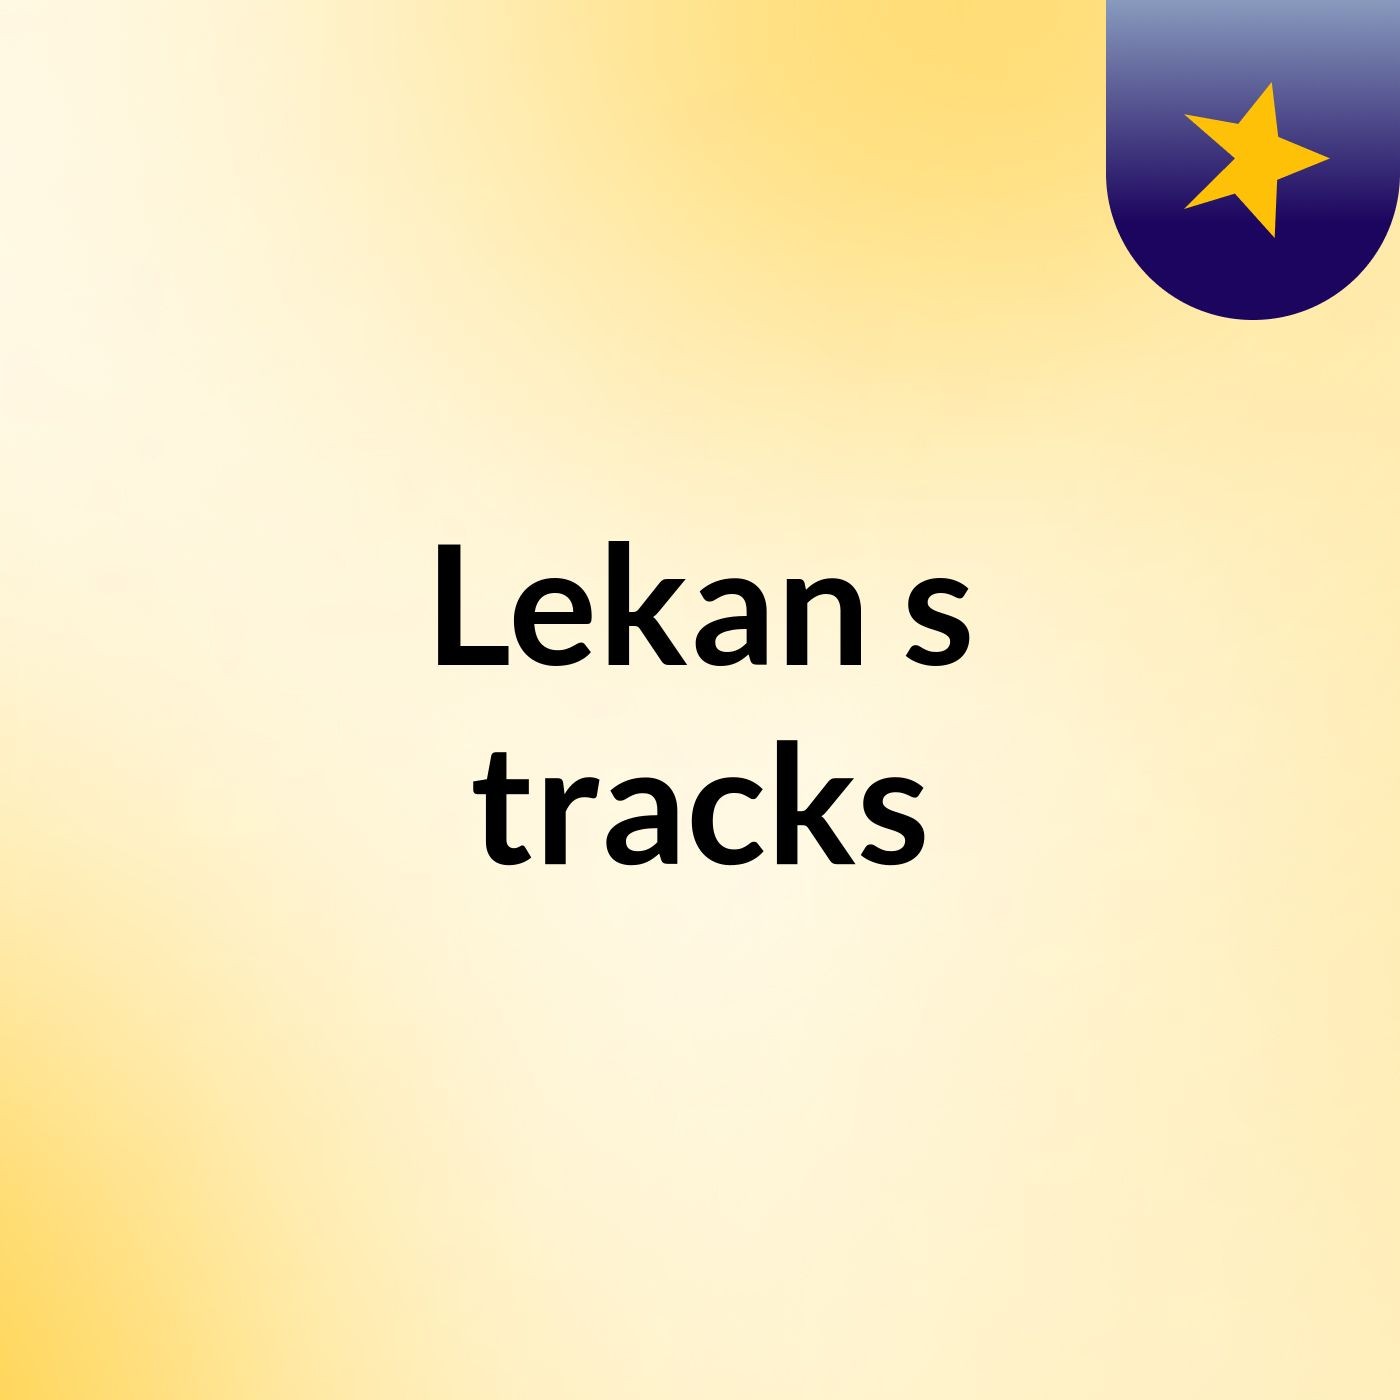 Lekan's tracks